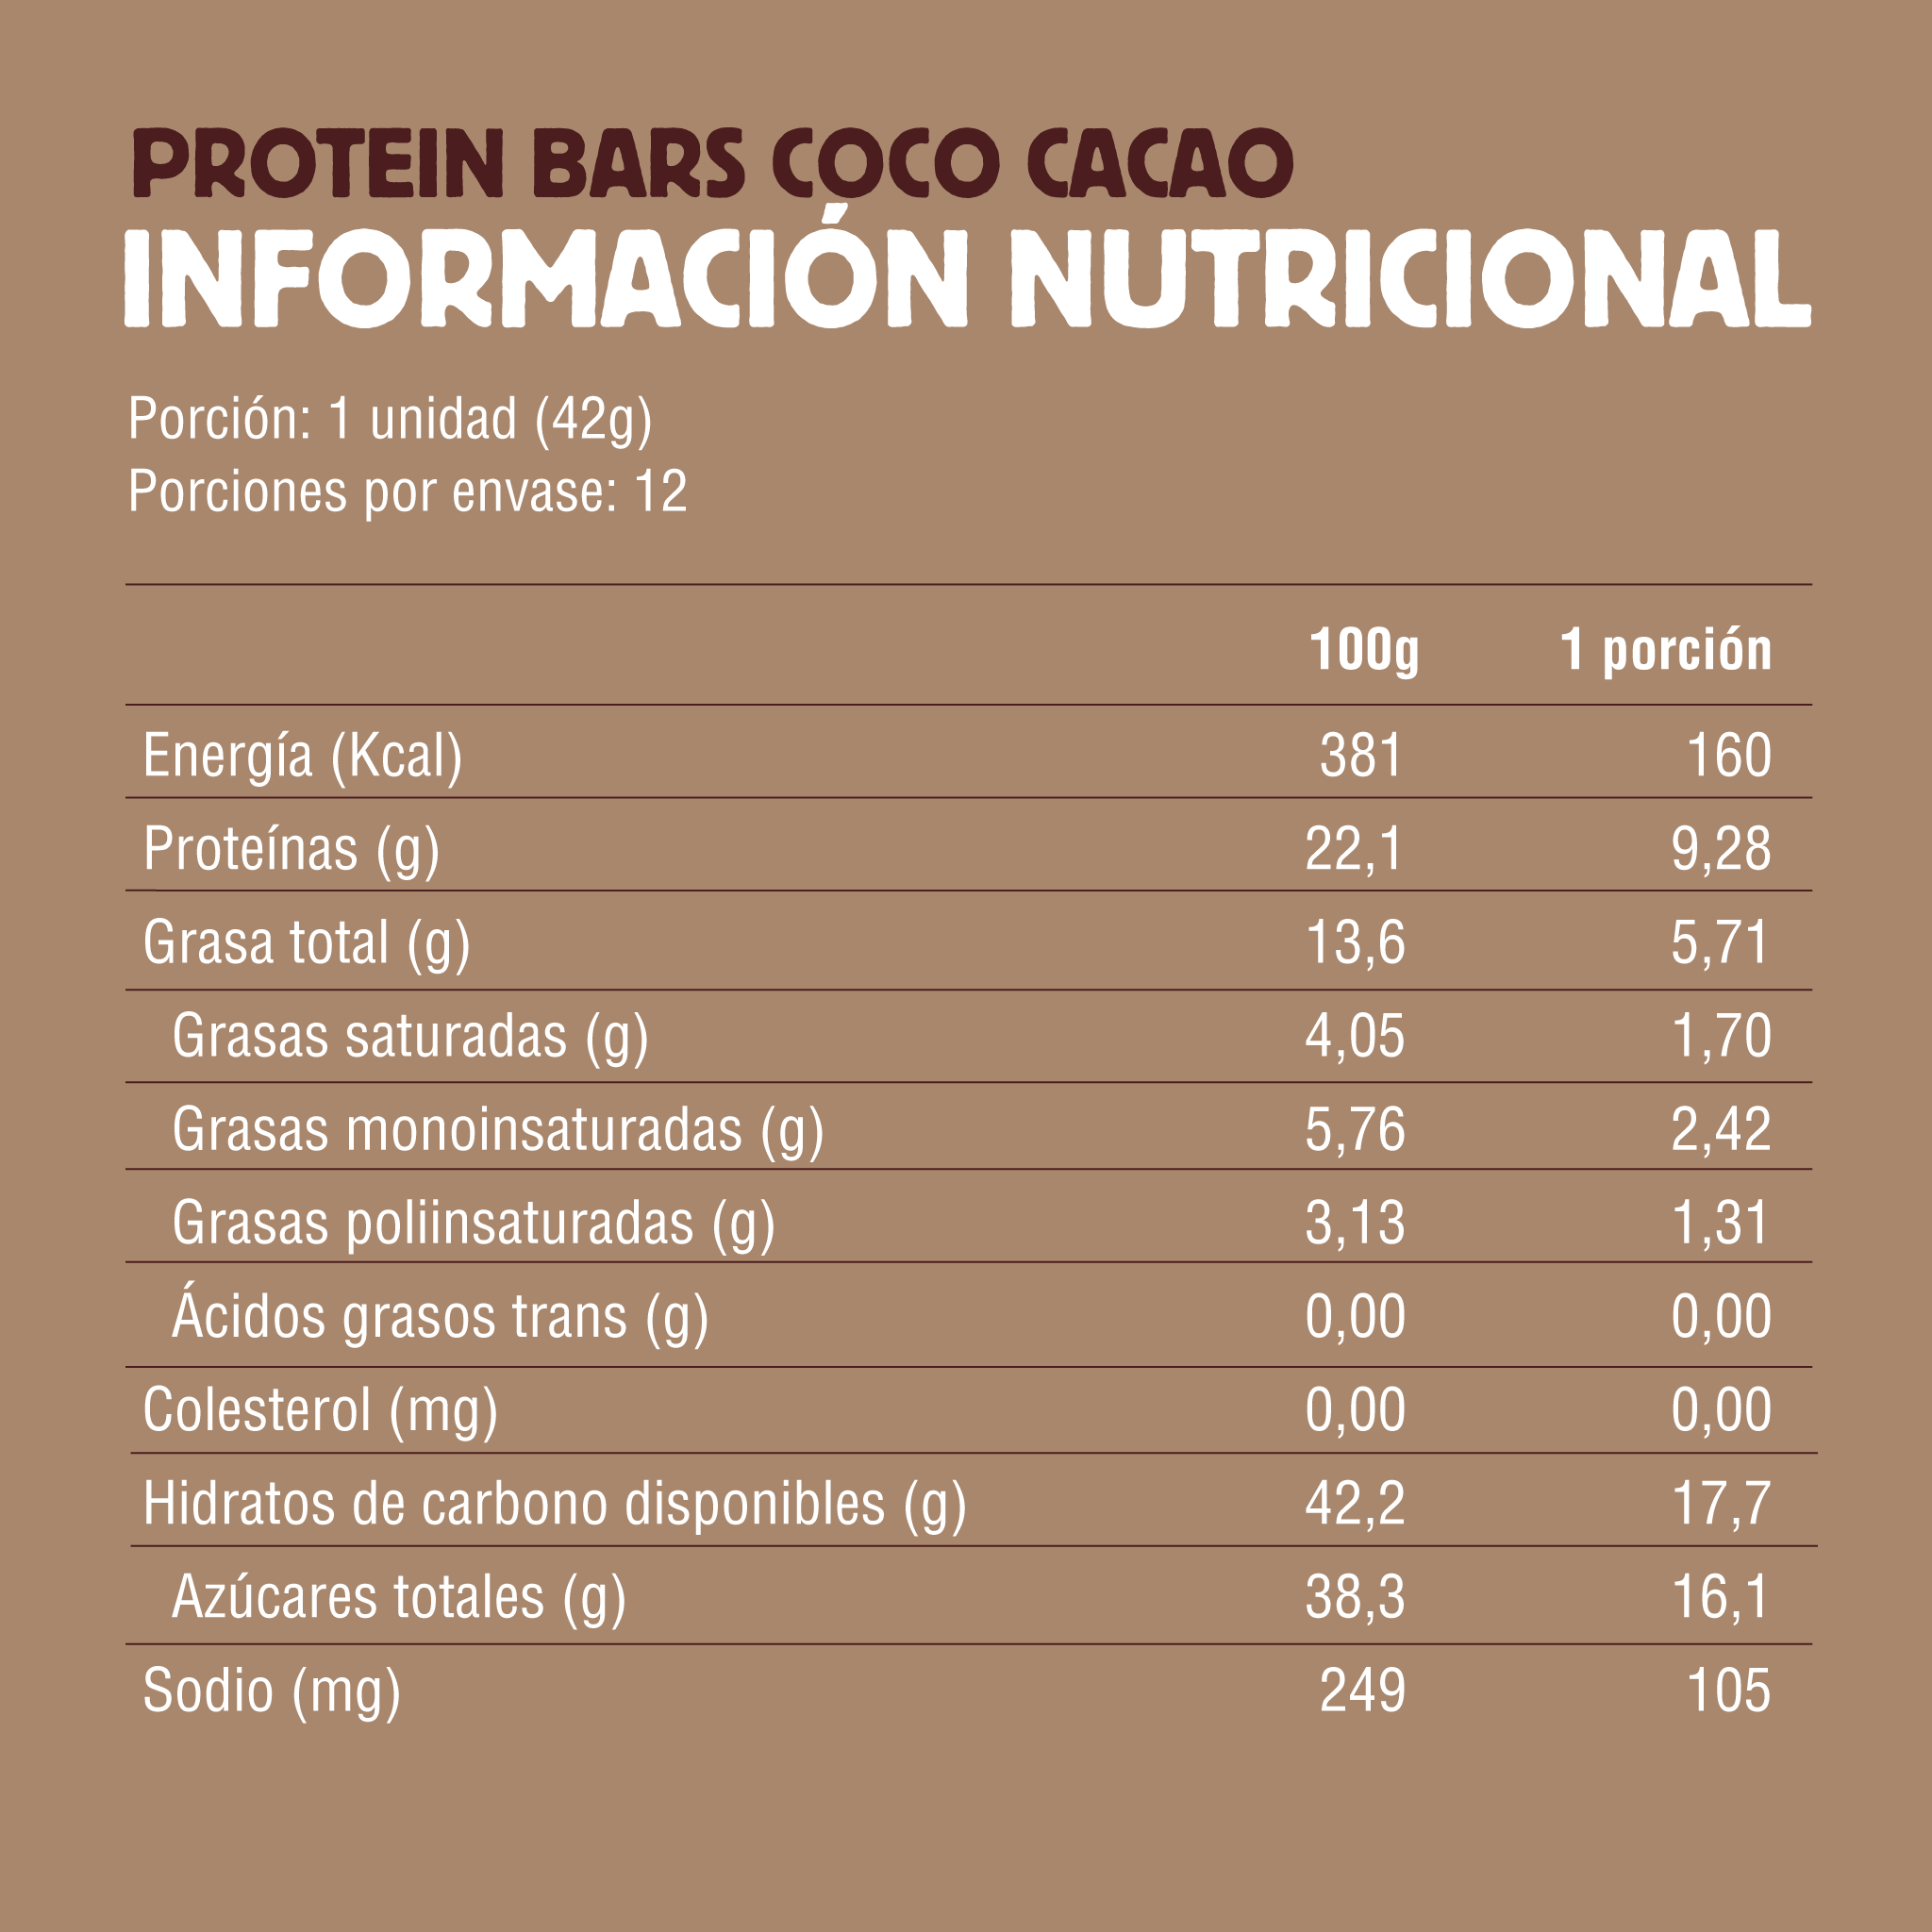 Fair Foods Protein Bar Coco Cacao 12 un